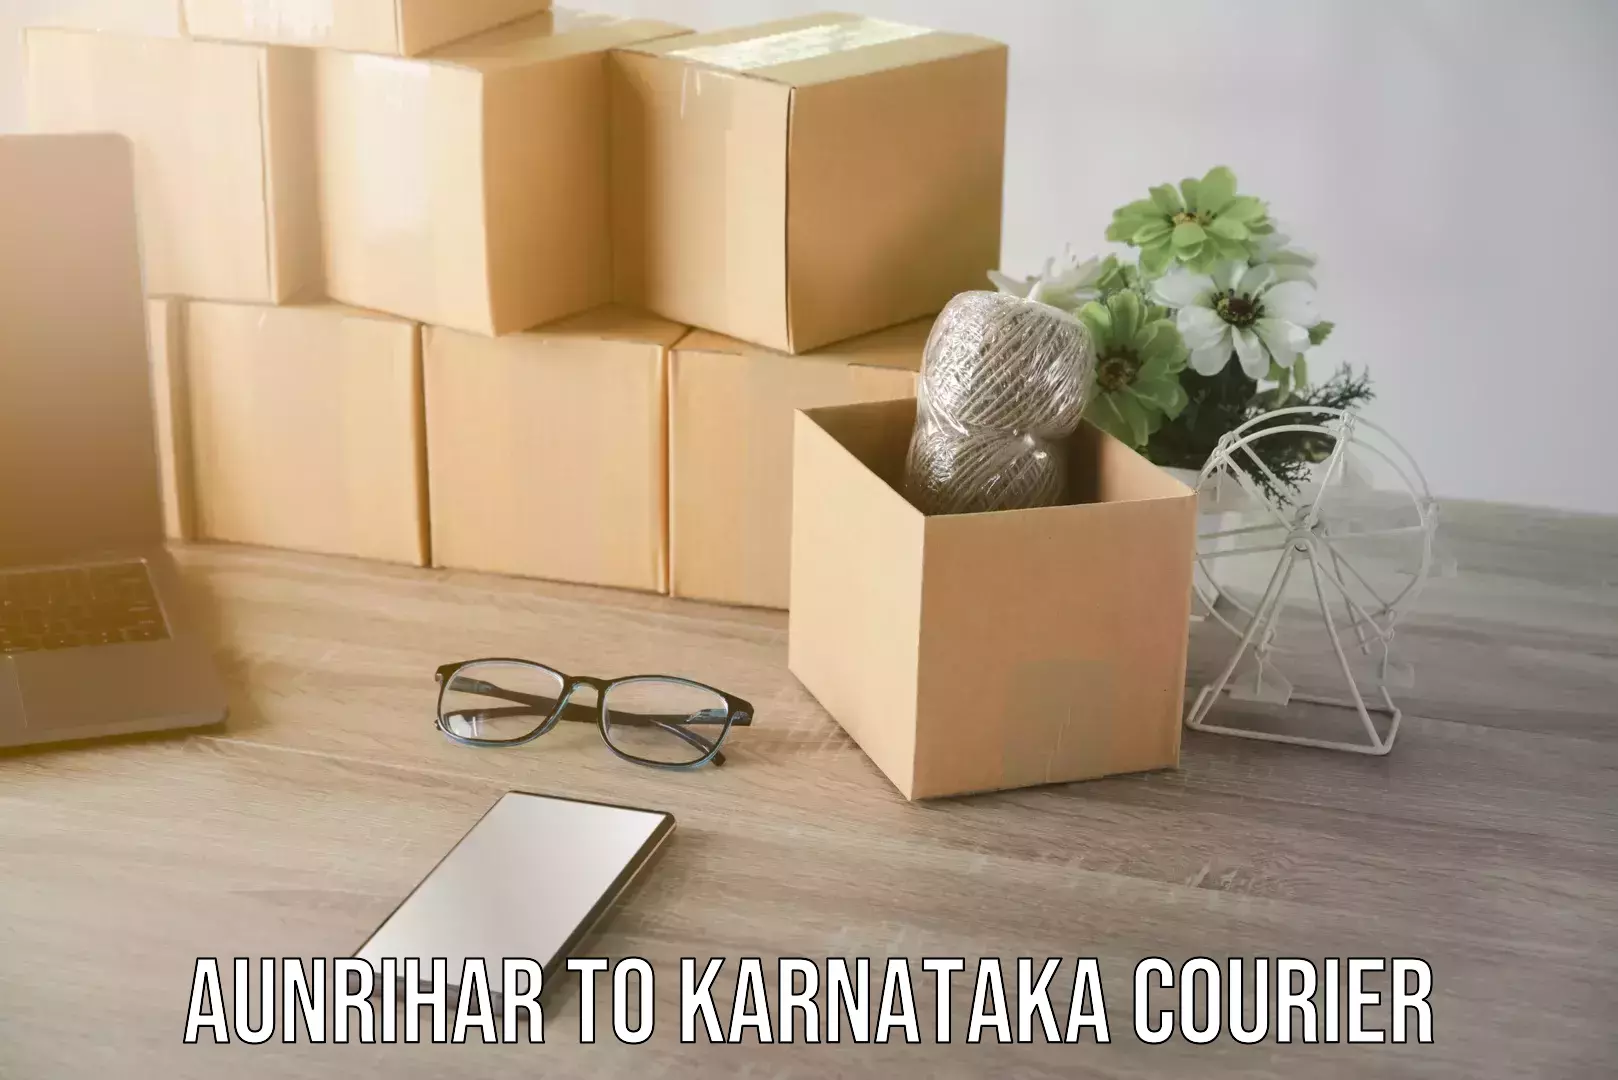 Courier service comparison Aunrihar to Karnataka